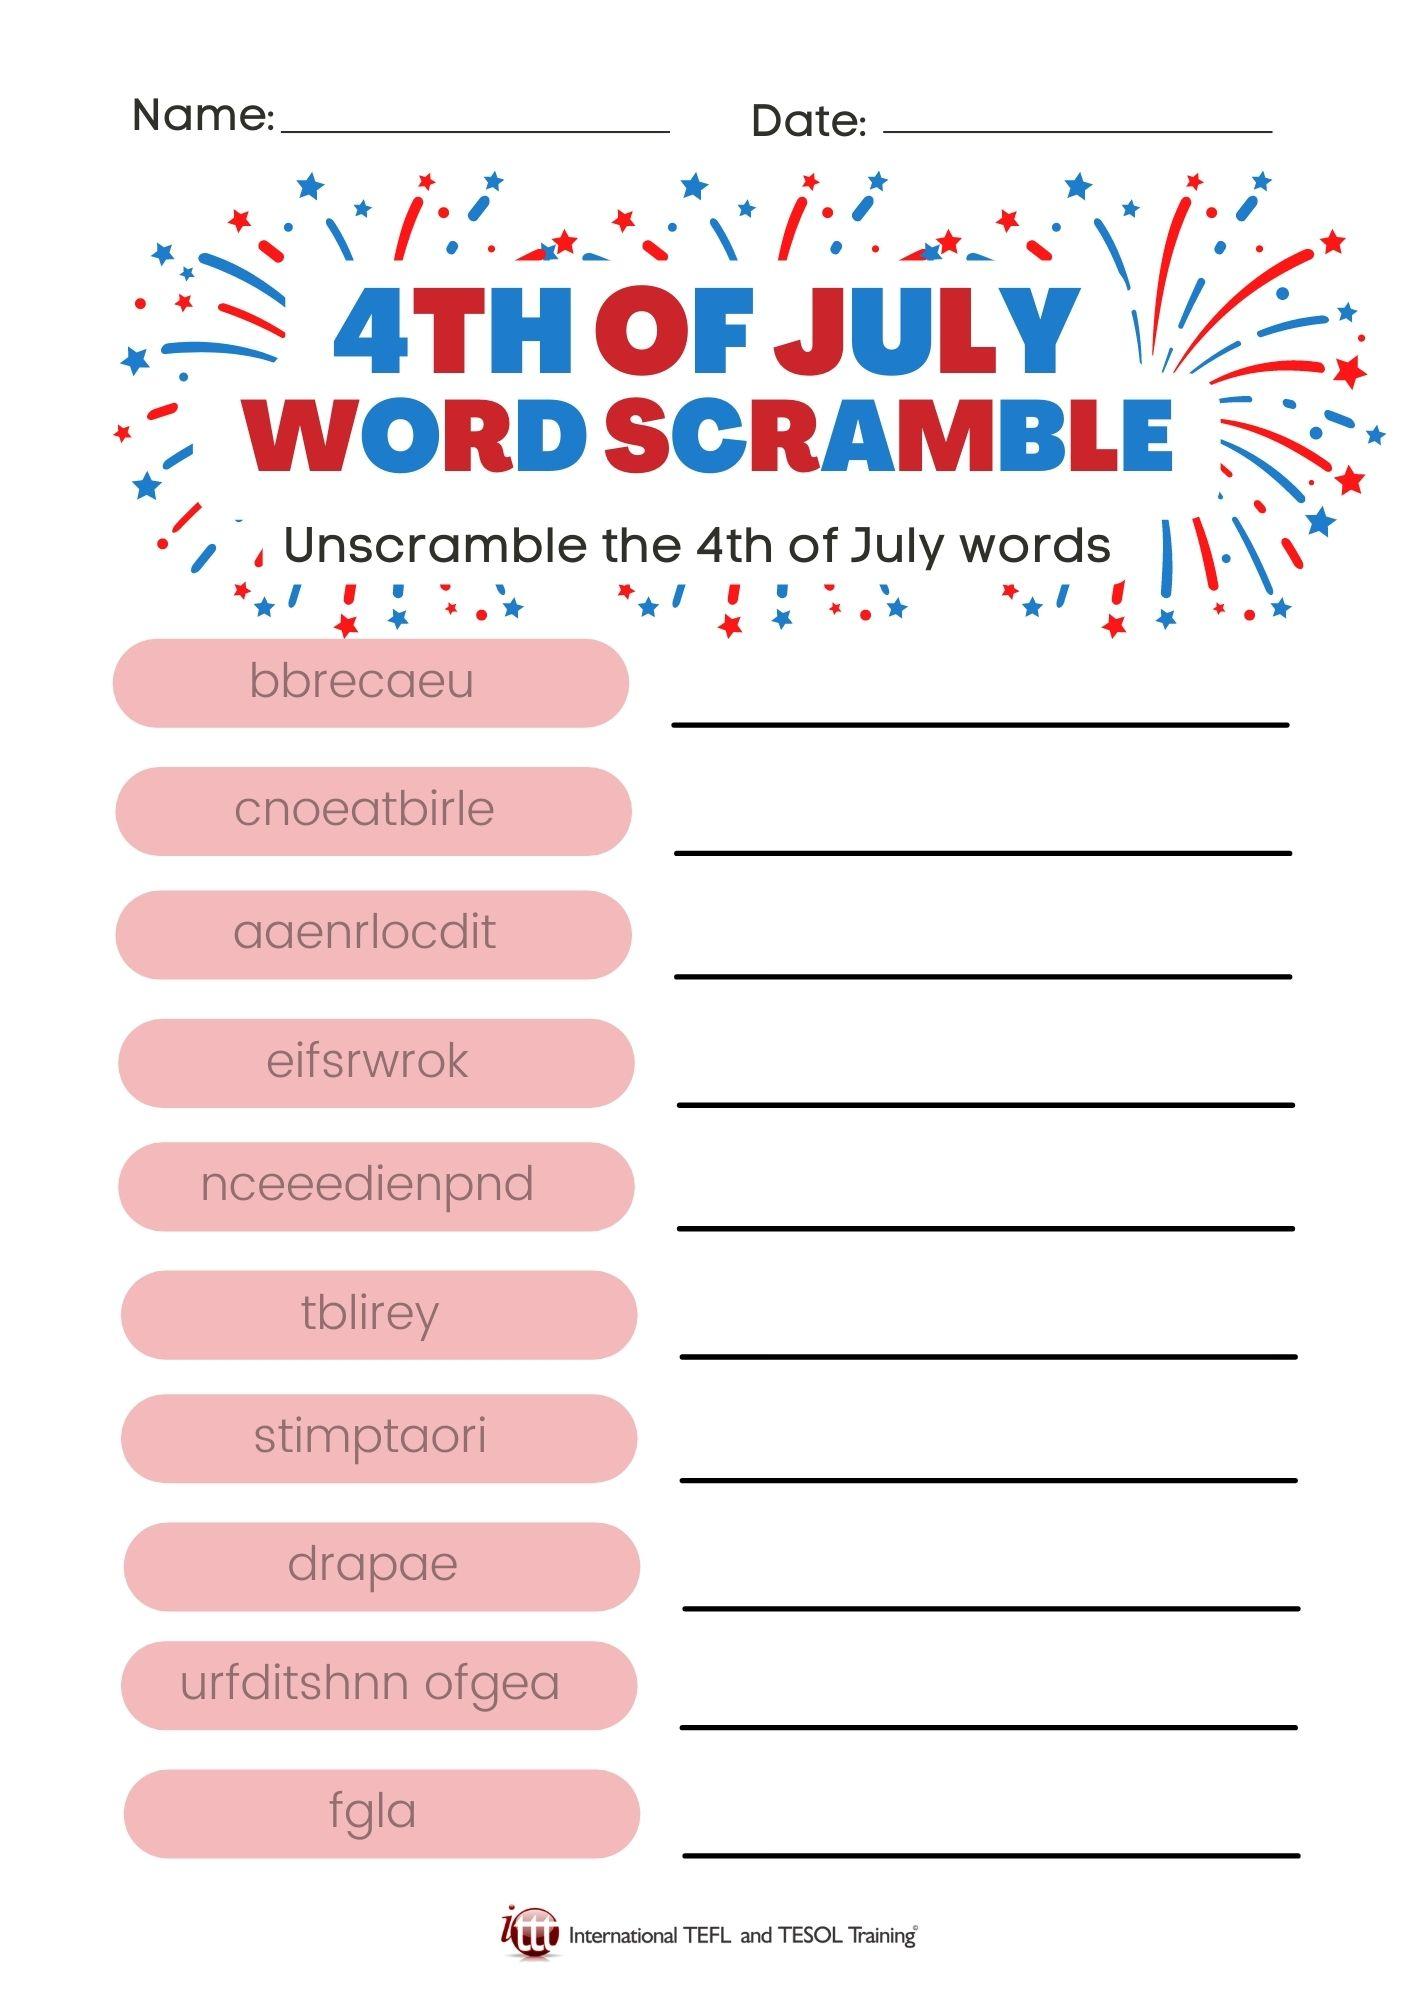 Grammar Corner 4th of July Word Scramble